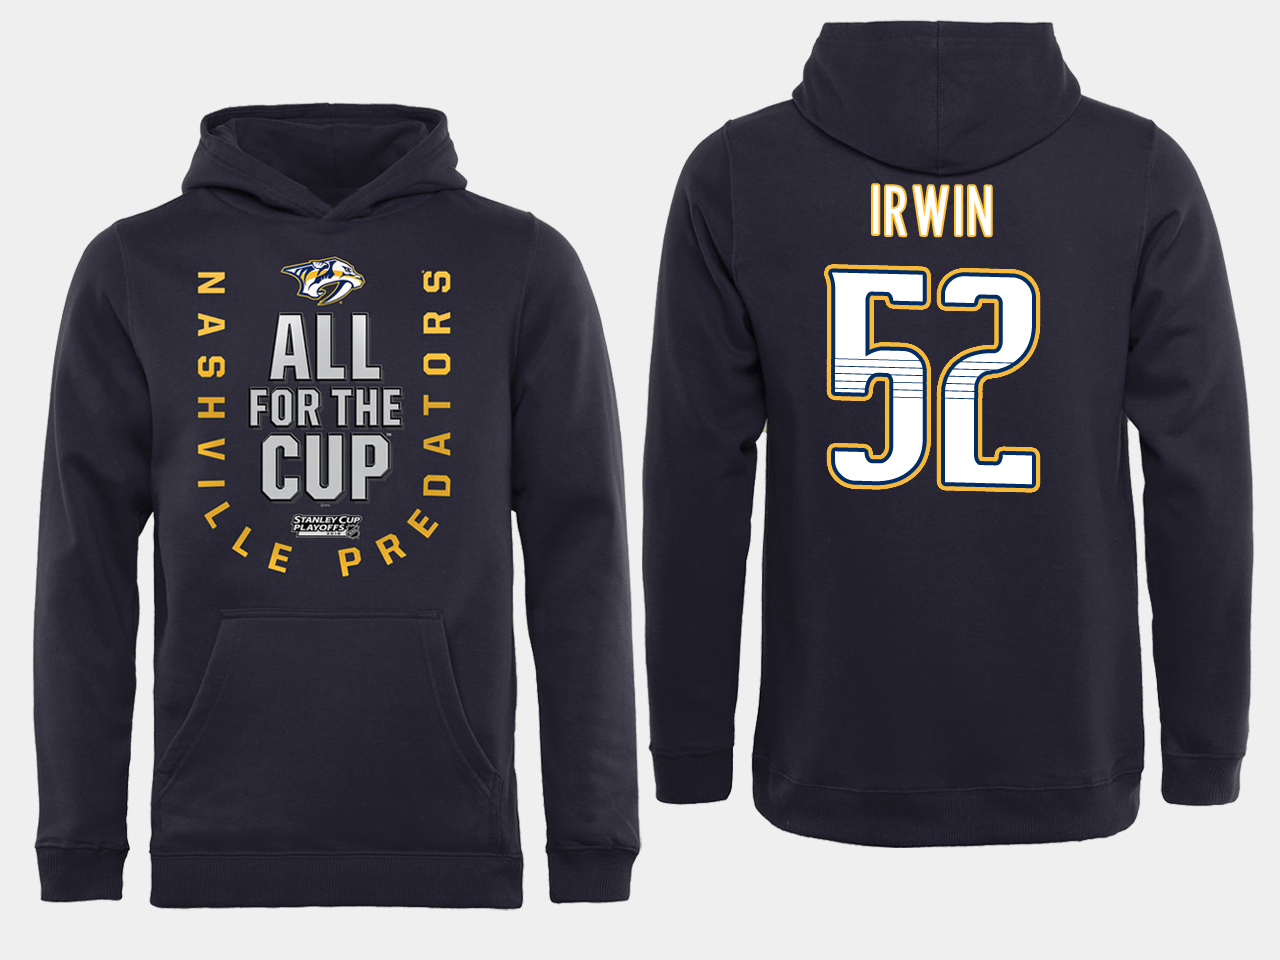 Men NHL Adidas Nashville Predators 52 Irwin black ALL for the Cup hoodie